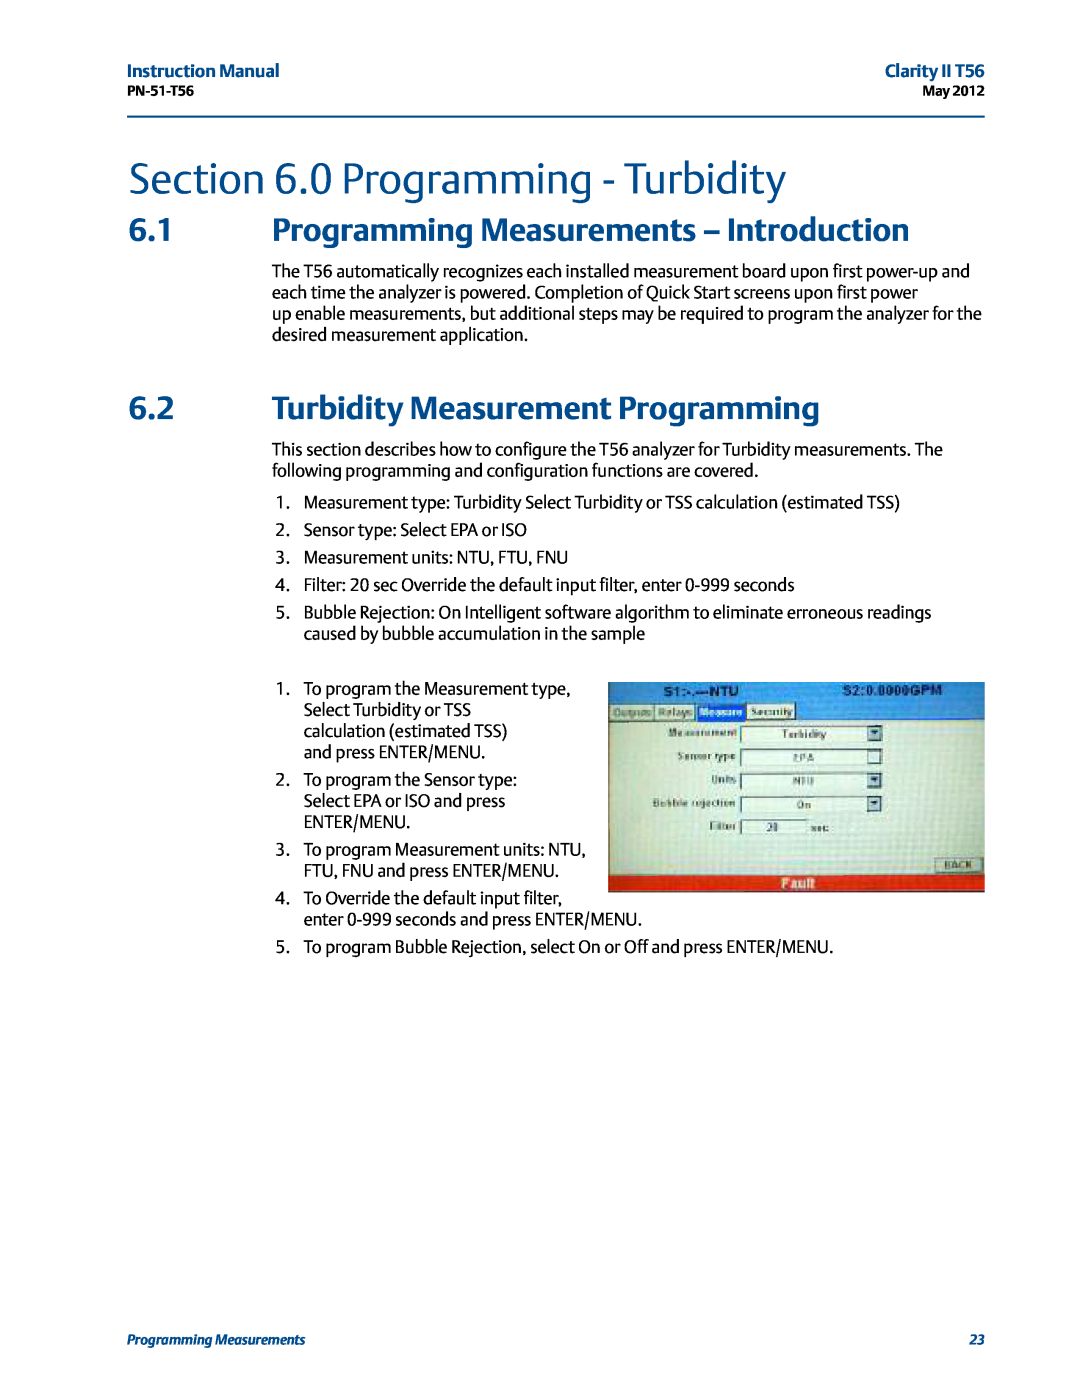 Emerson PN-51-T56 0 Programming - Turbidity, Programming Measurements - Introduction, Turbidity Measurement Programming 